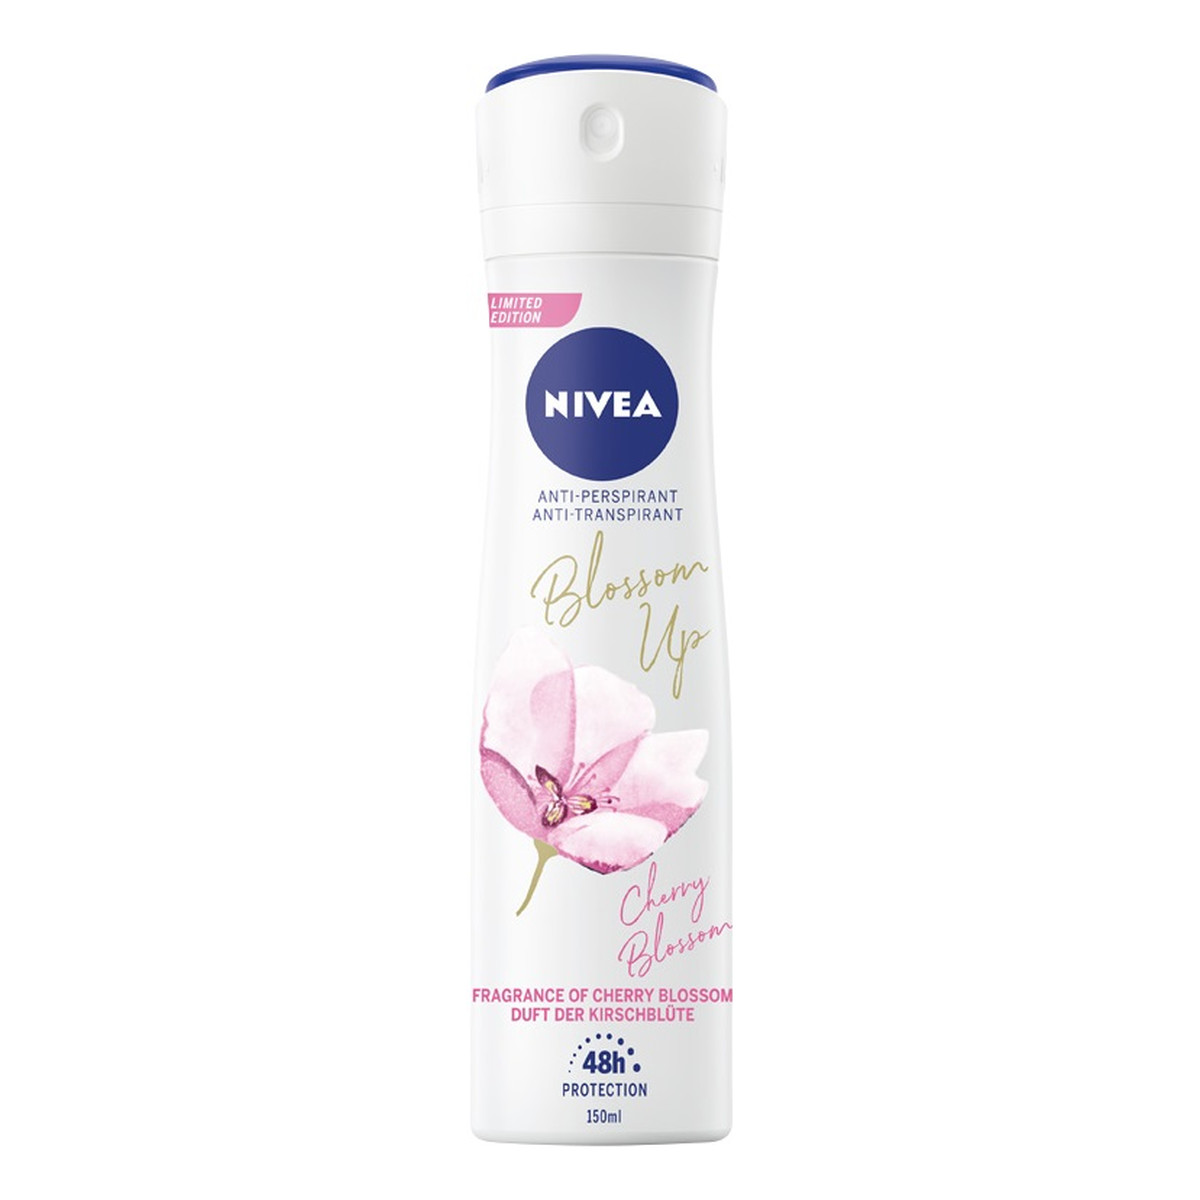 Nivea Blossom Up Antyperspirant spray Kwiat Wiśni 150ml